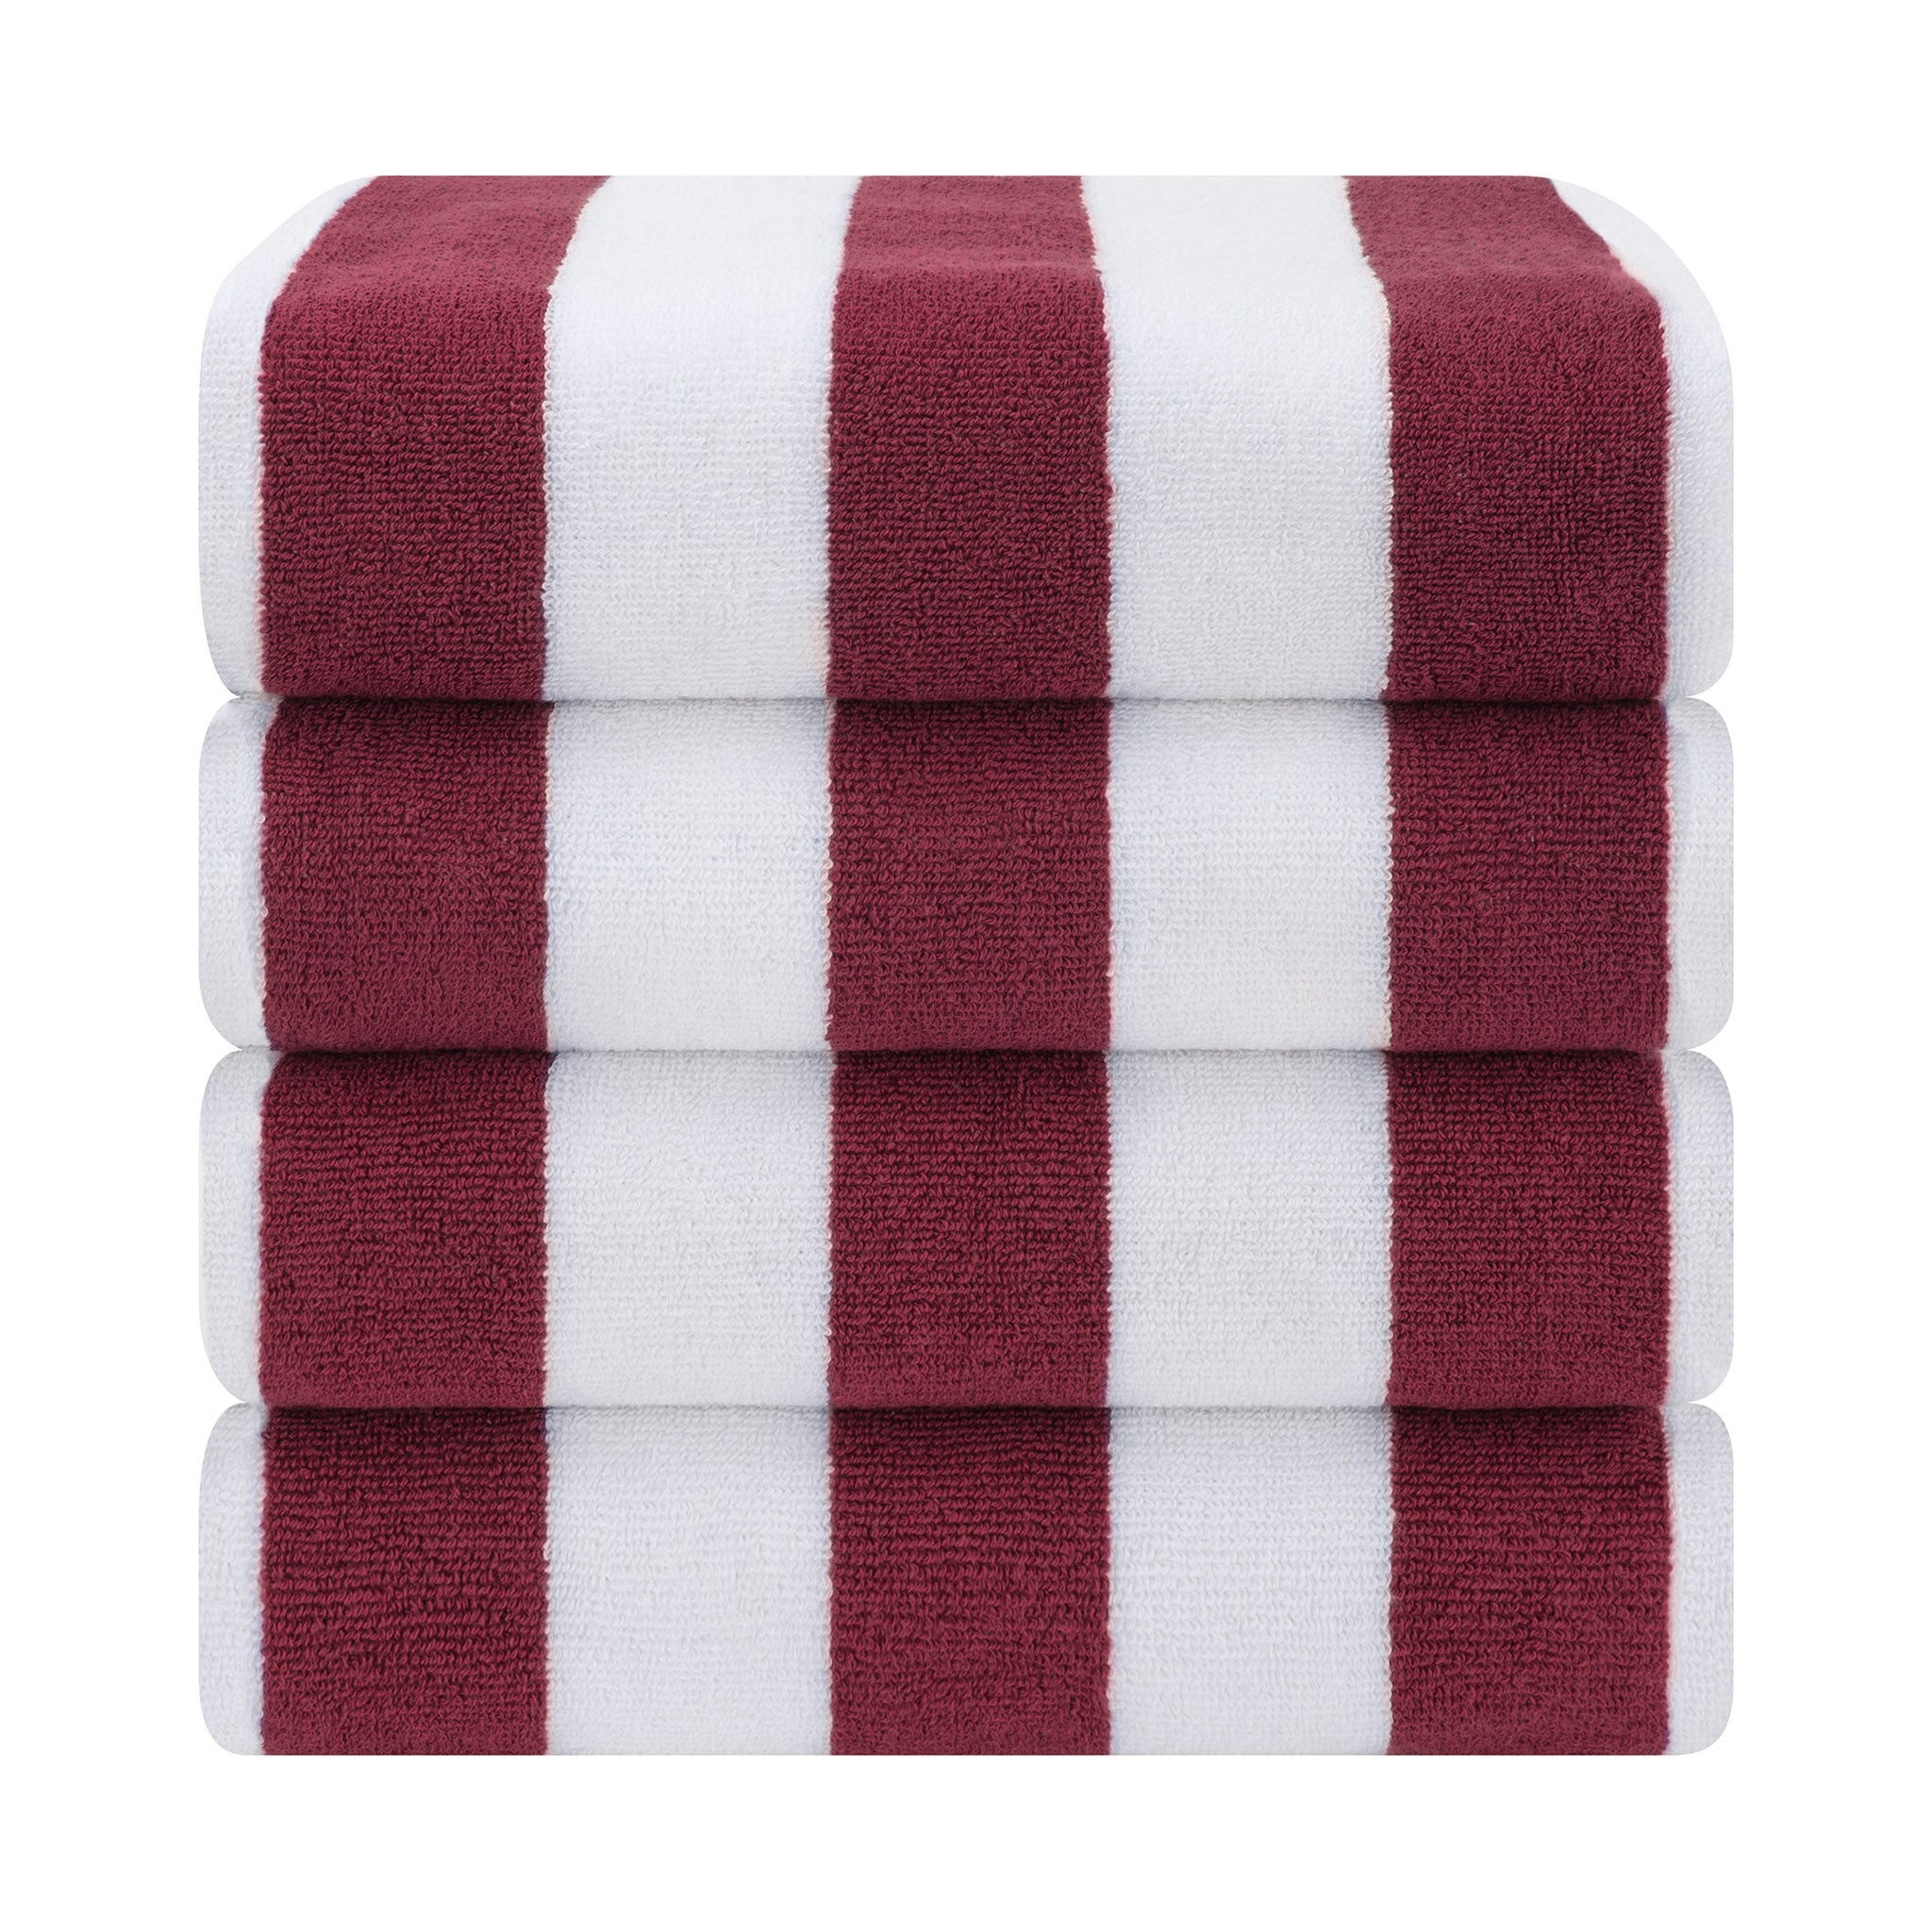 American Soft Linen 100% Cotton 4 Pack Beach Towels Cabana Striped Pool Towels -Bordeaux-2